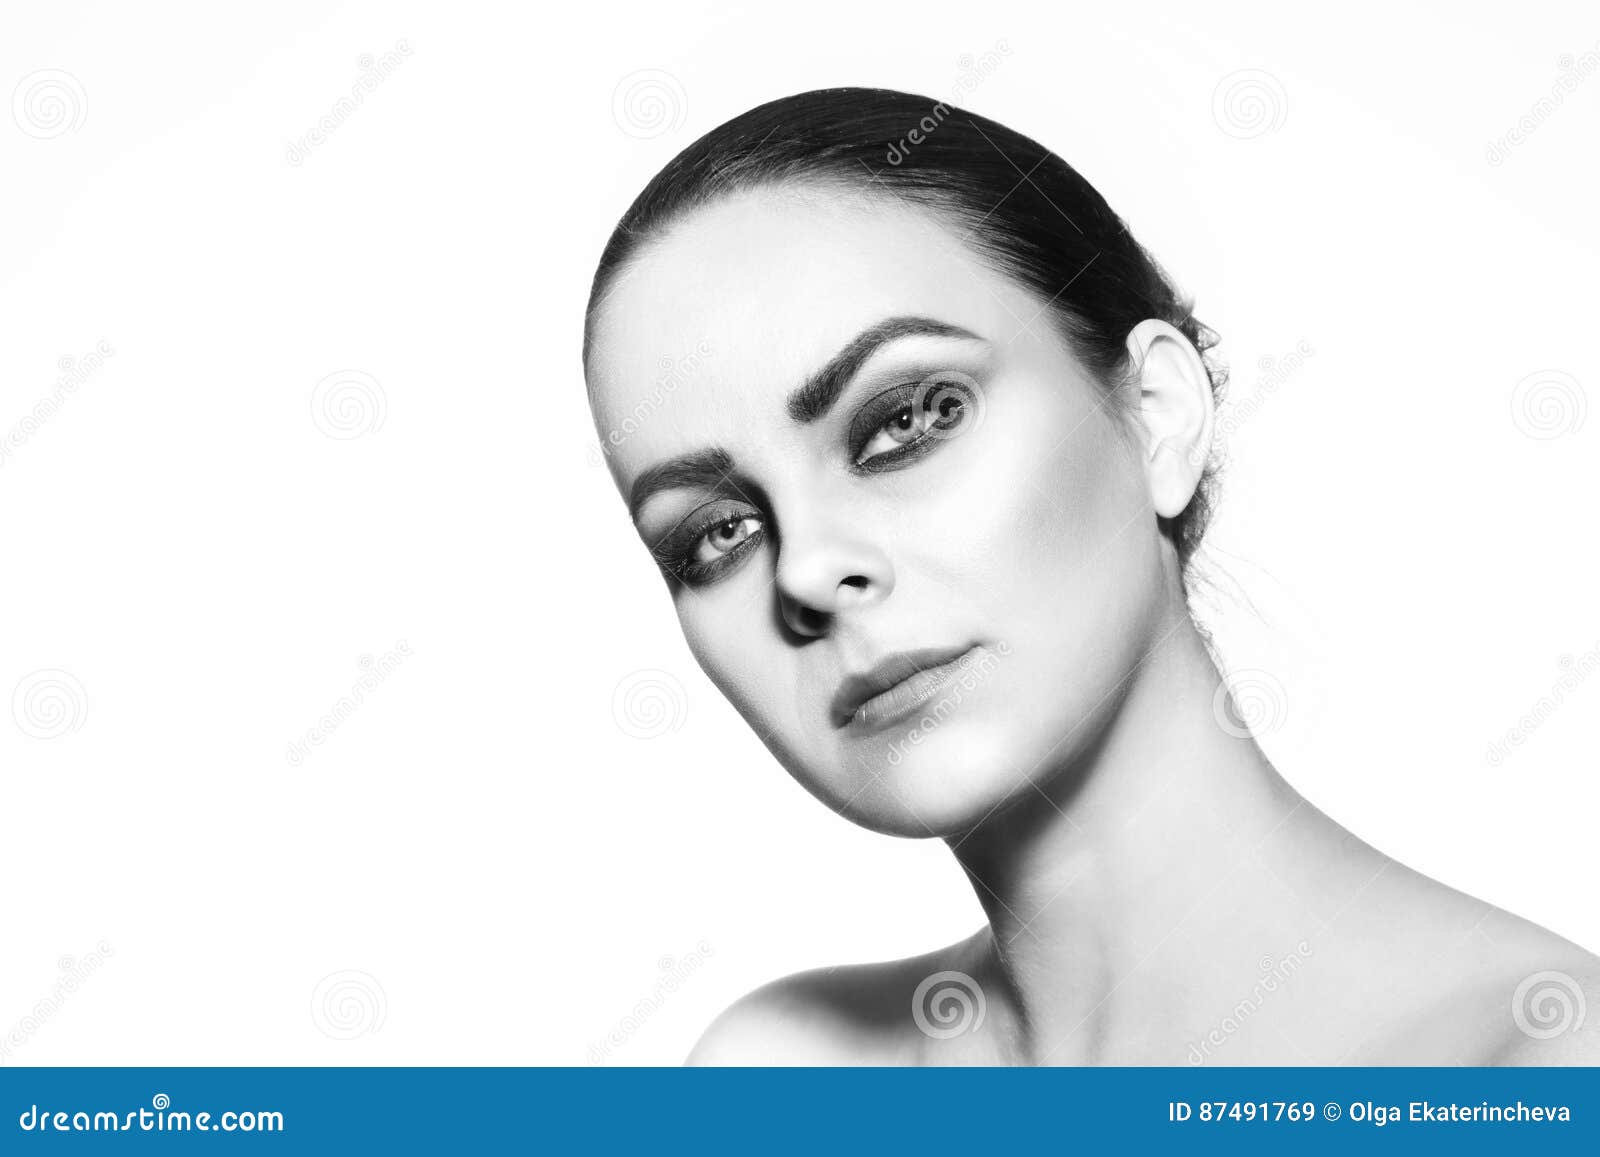 Woman stock image. Image of organic, smoky, ageing, lash - 87491769